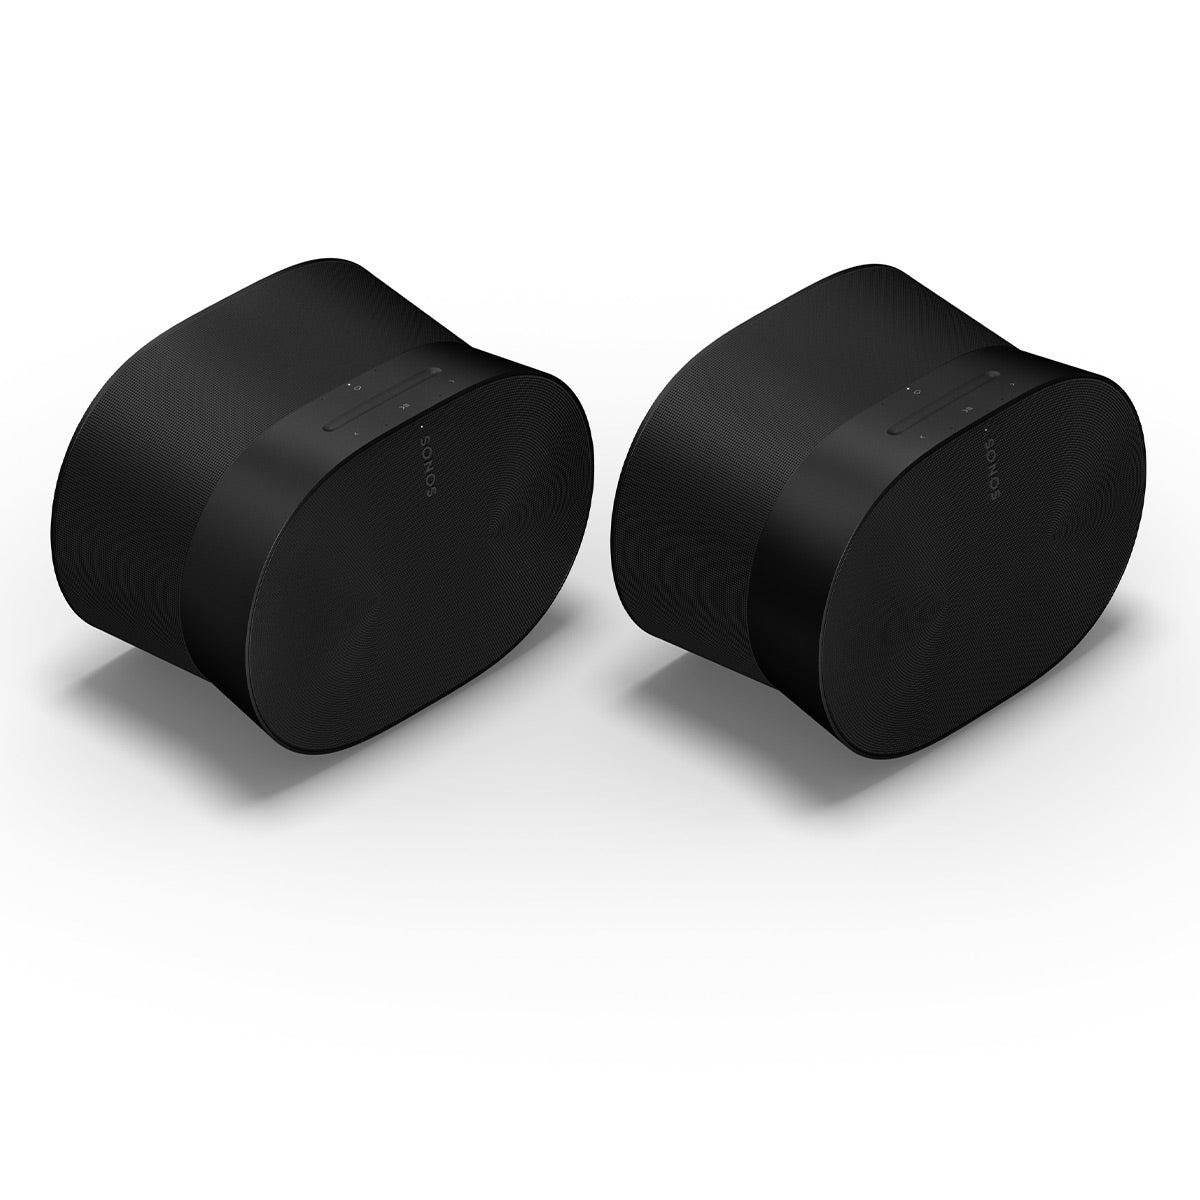 Buy JBL Authentic 300 Smart Home Speaker - Black & Gold, Wireless speakers